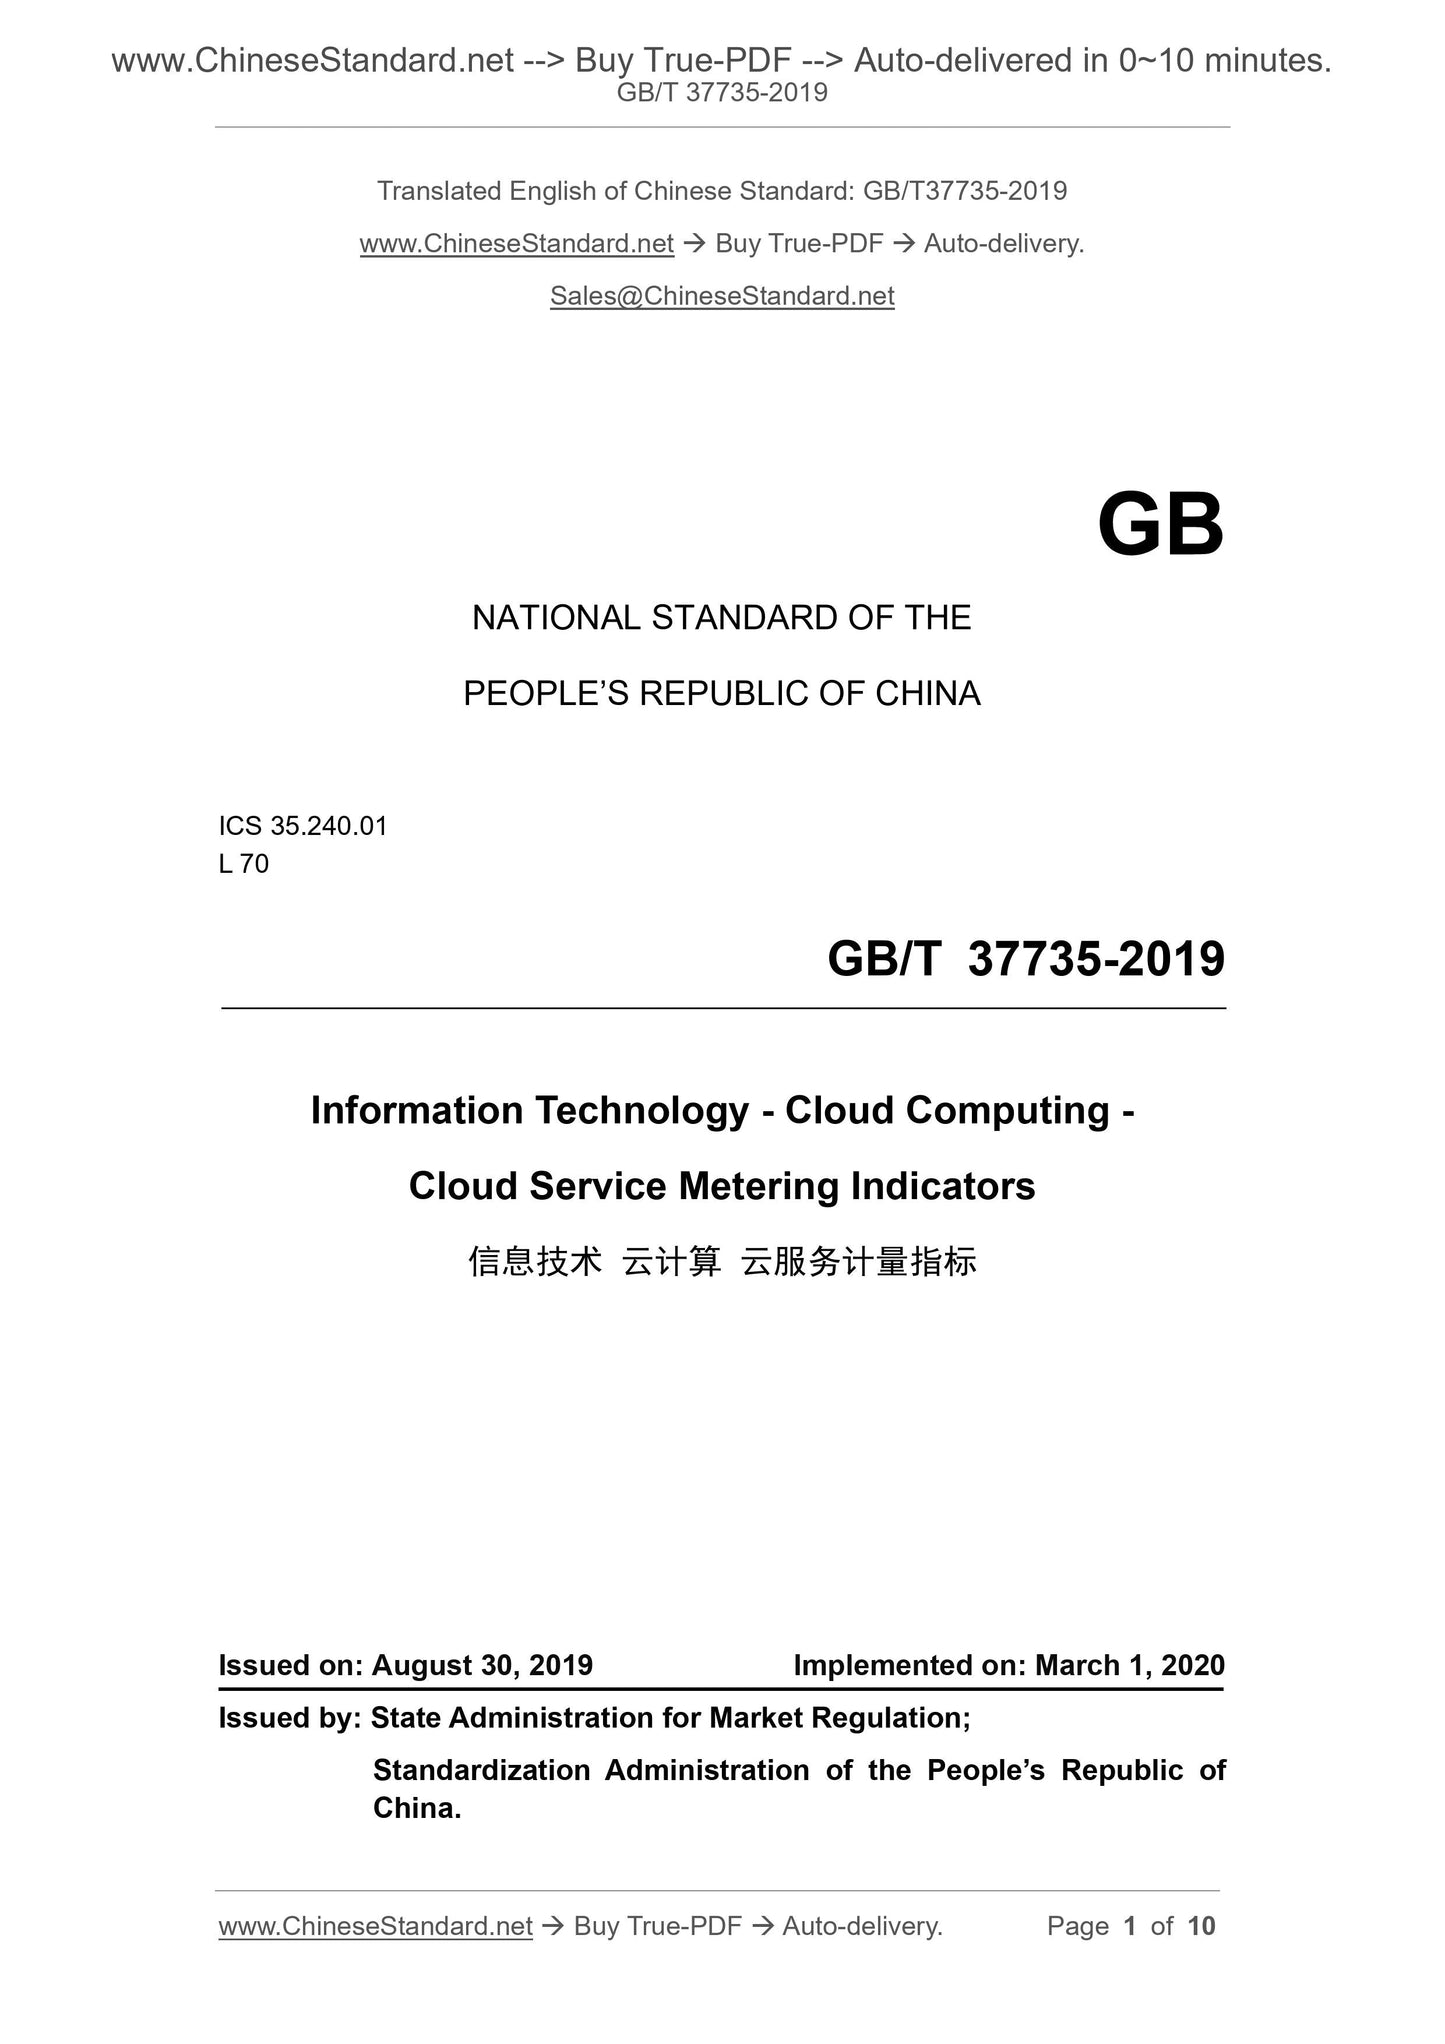 GBT37735-2019 Page 1